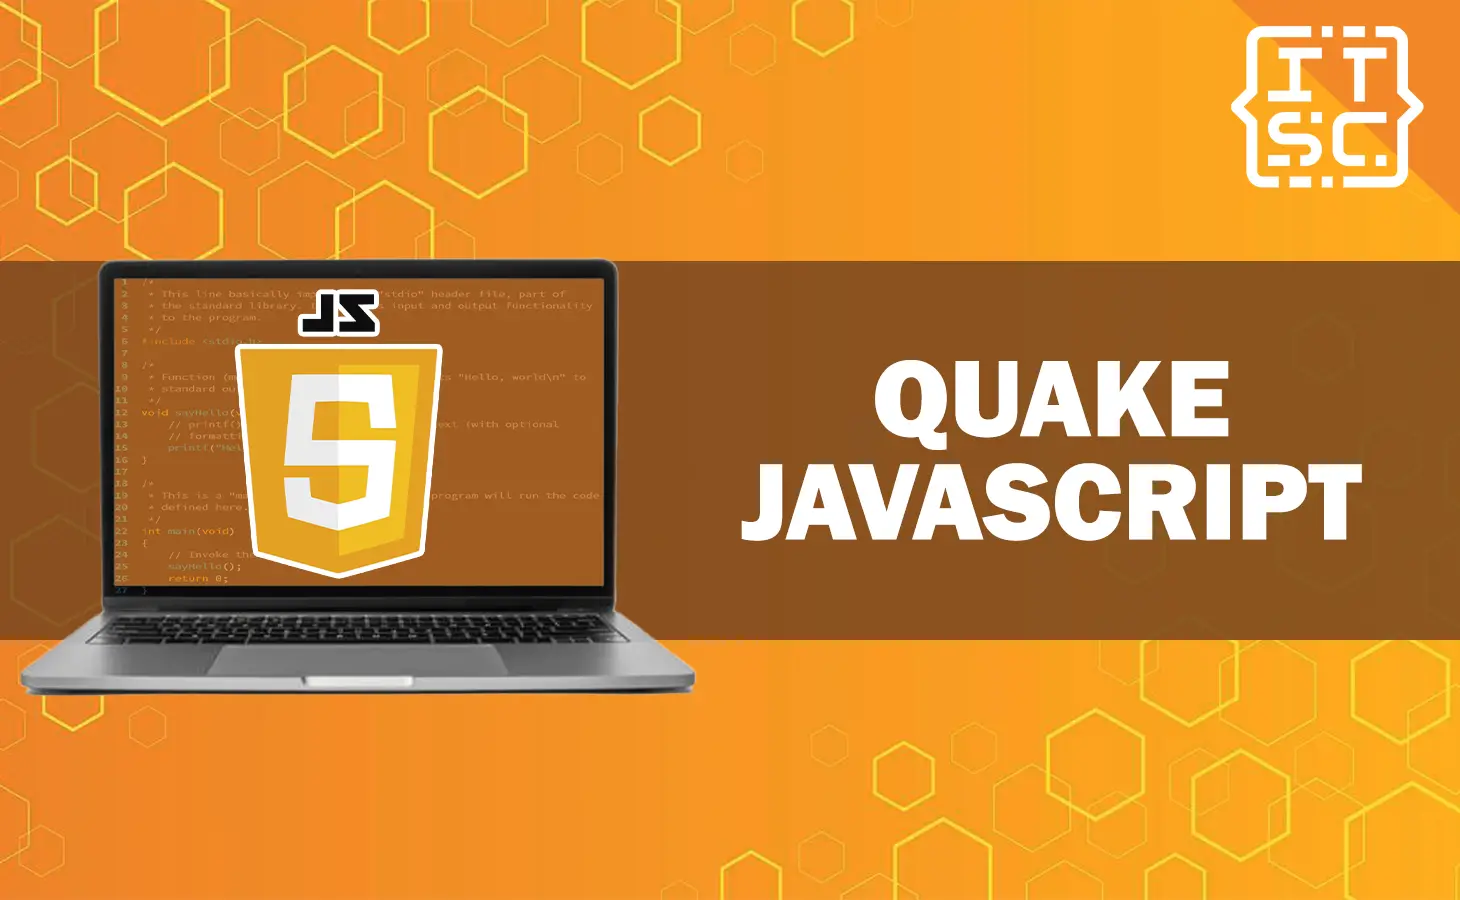 Quake JavaScript